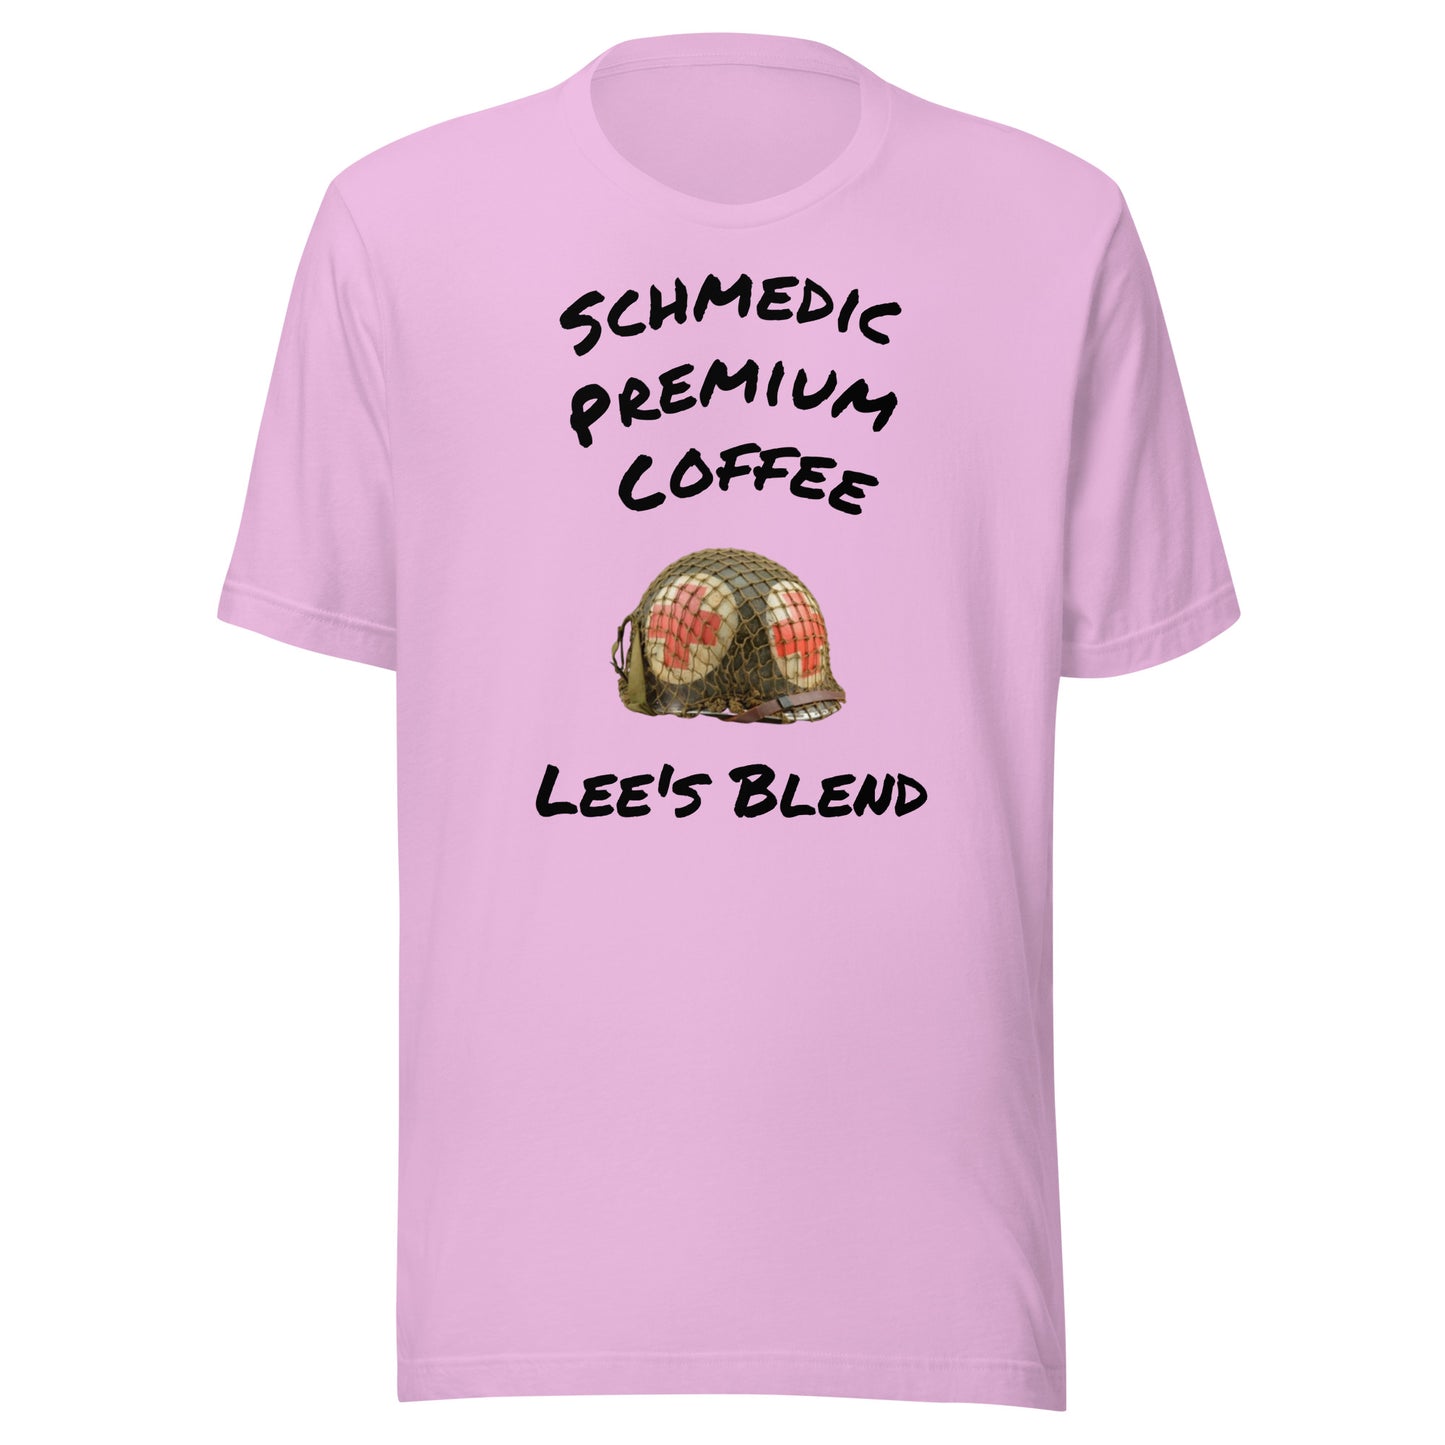 Lee's Blend (Black Lettering) Unisex t-shirt